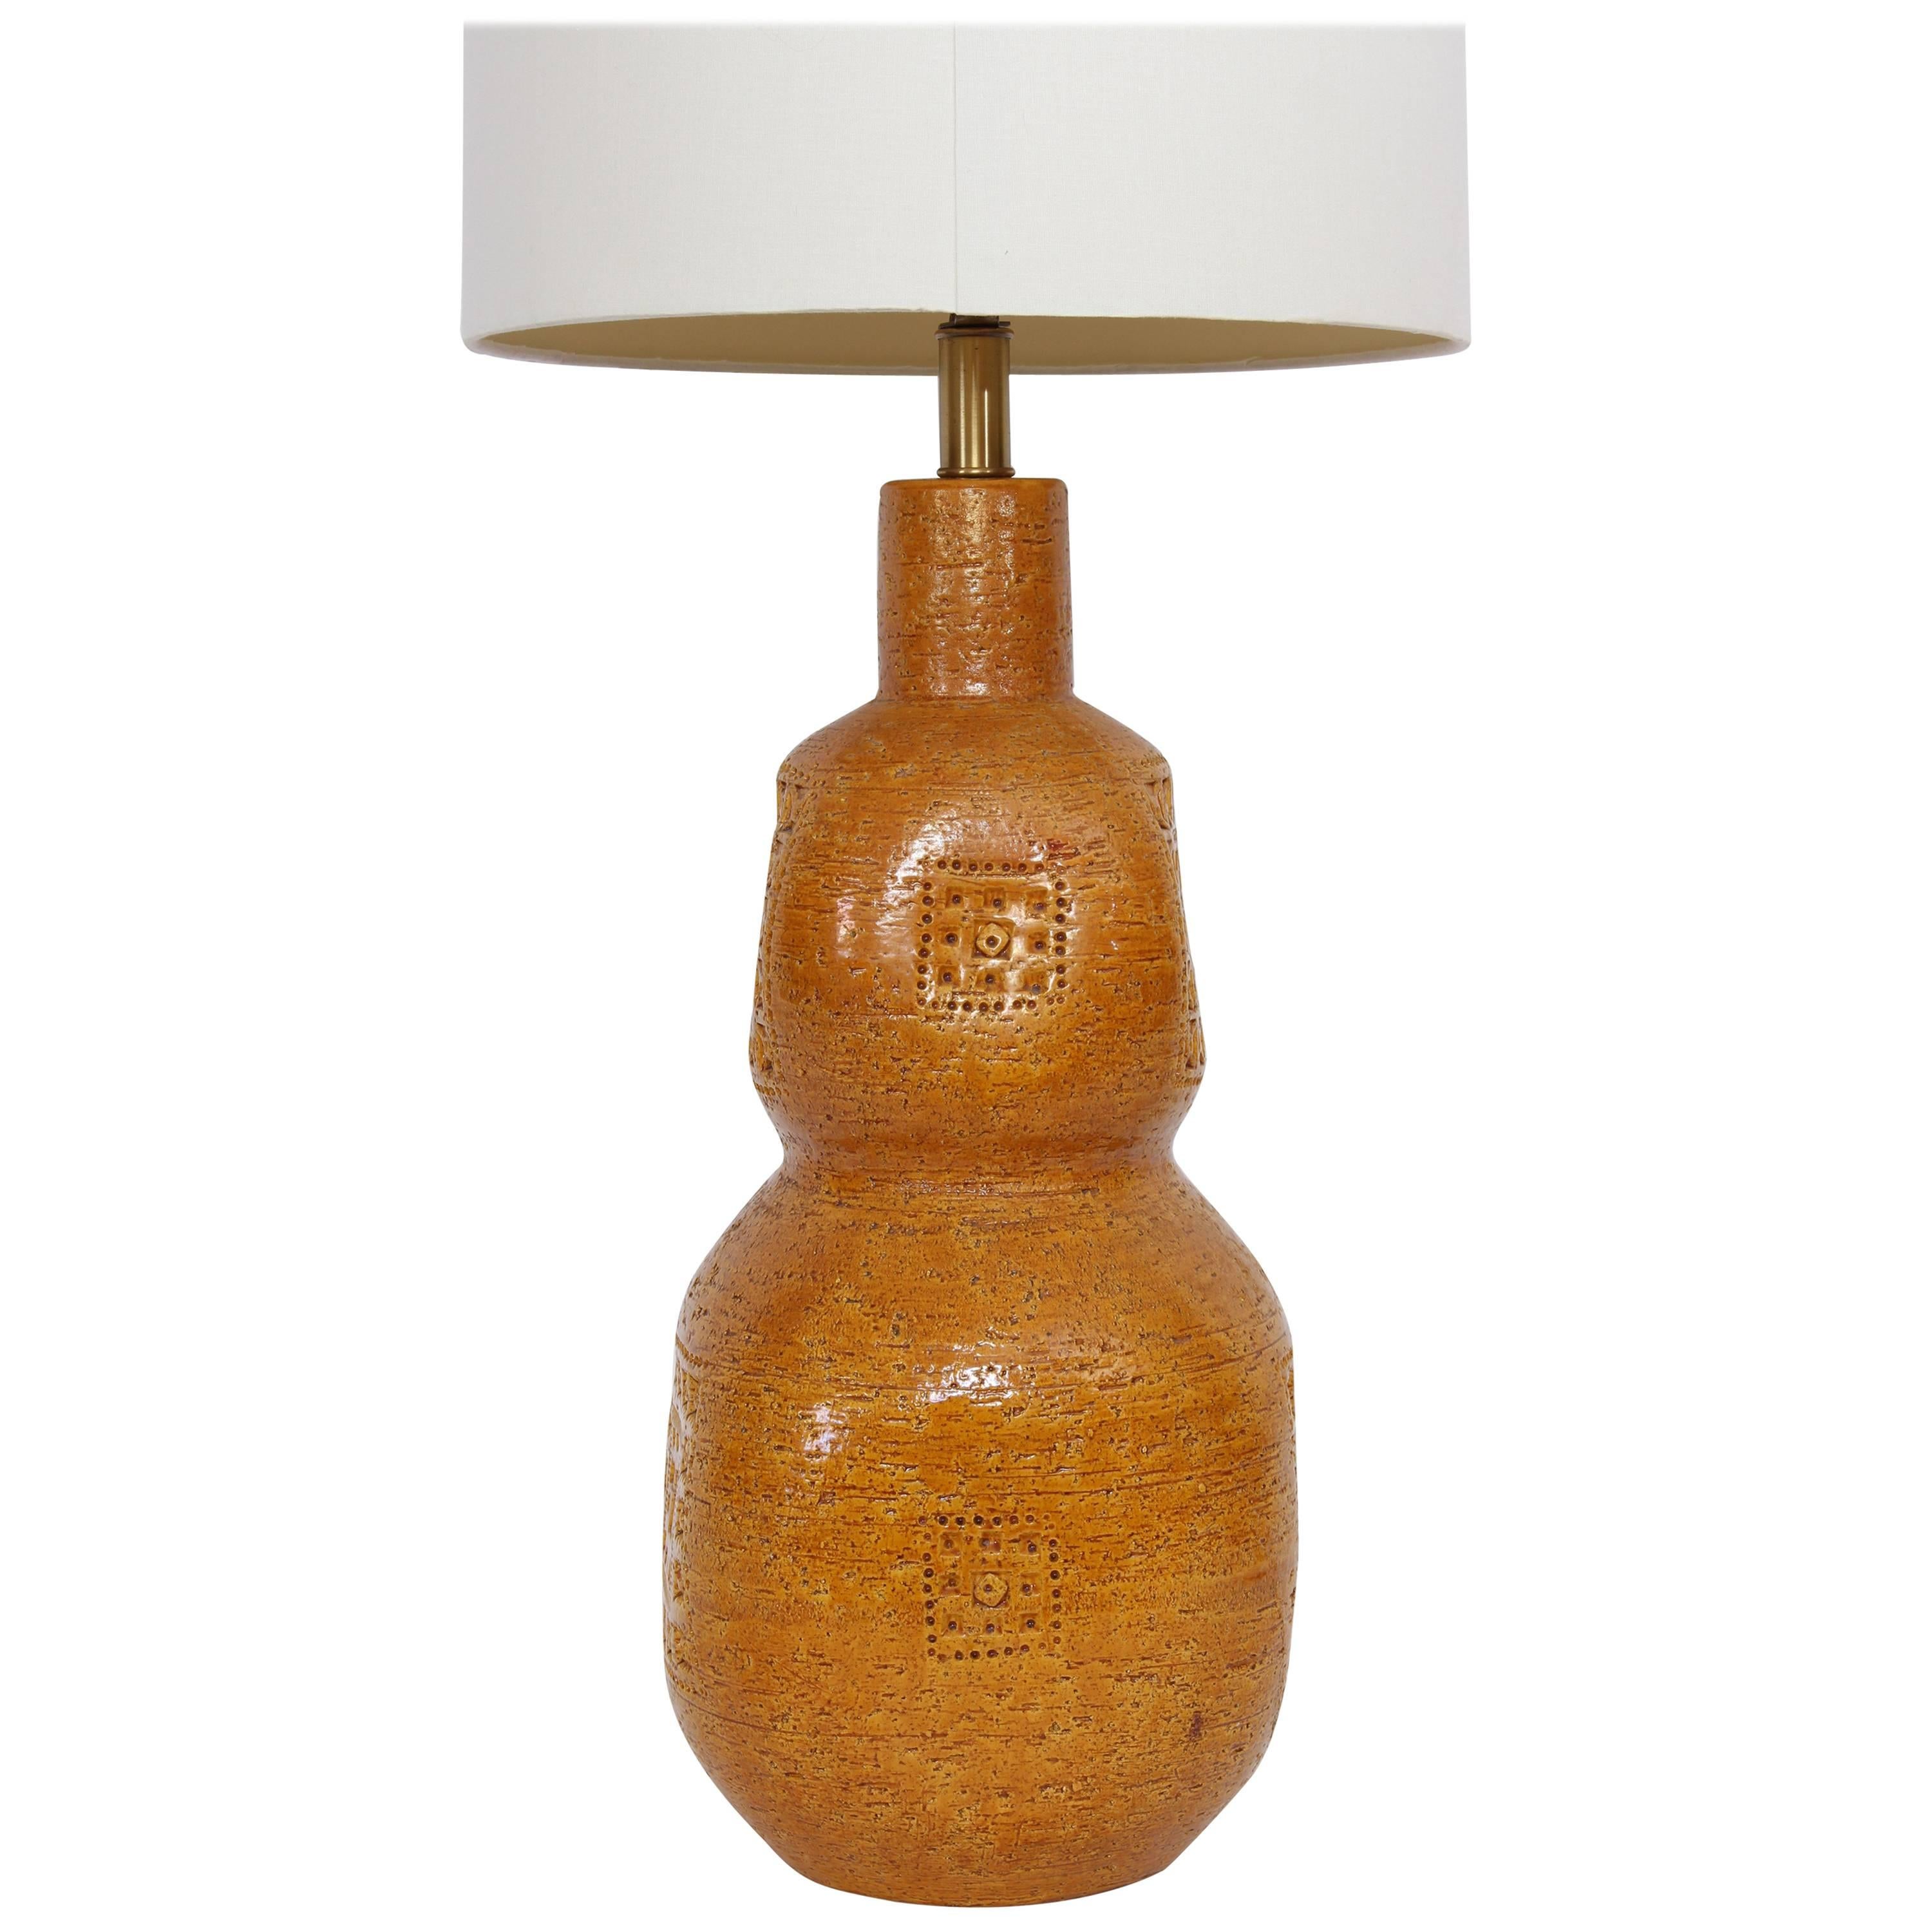 Lampe de bureau monumentale en céramique ocre brillante incisée Aldo Londi pour Bitossi, années 1950